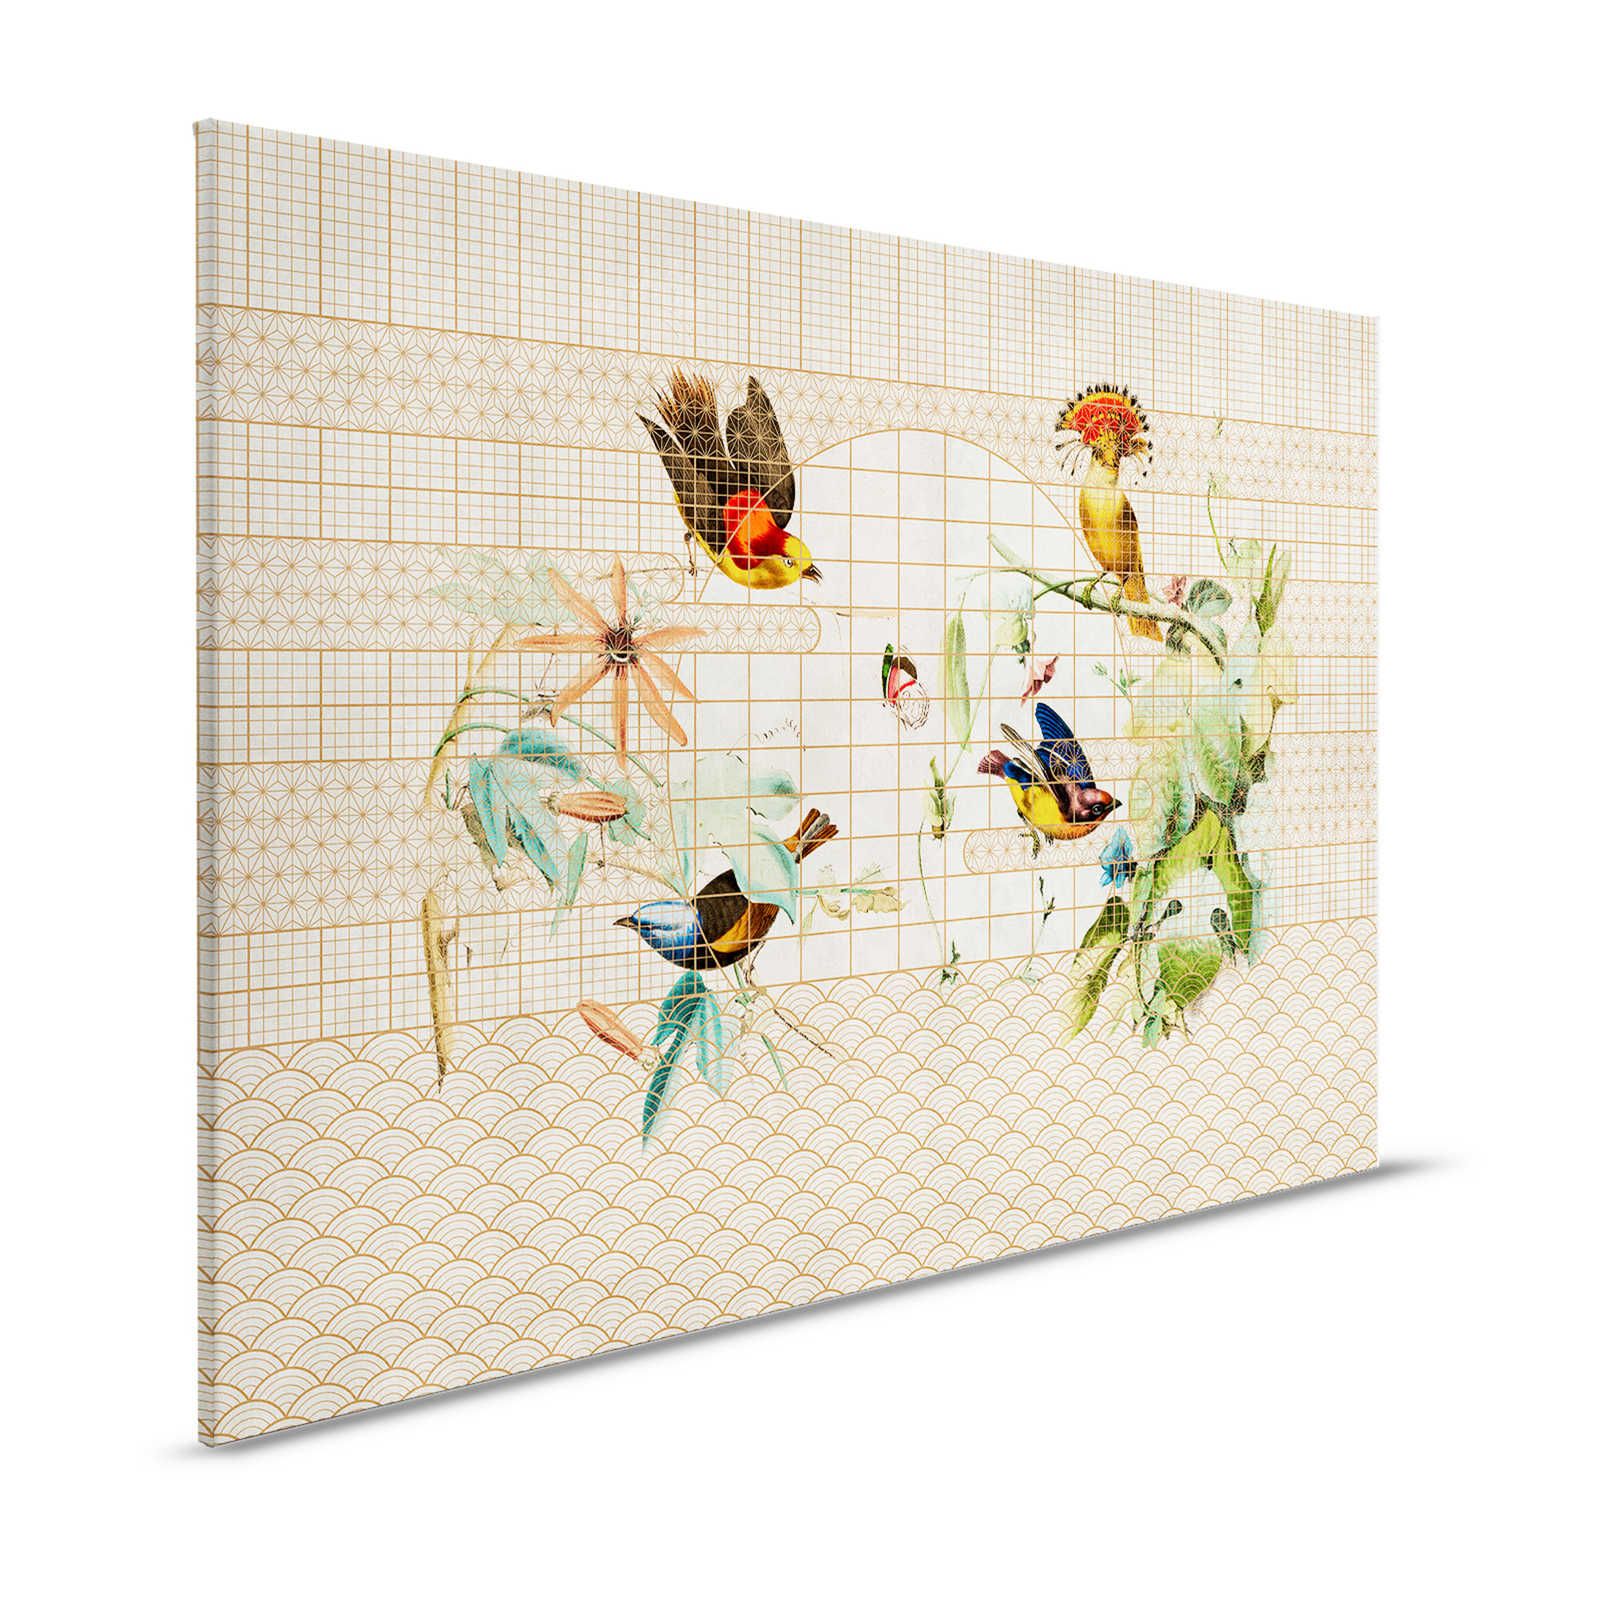 Pajarera 1 - Cuadro en lienzo Aves y mariposas en pajarera dorada - 1,20 m x 0,80 m
